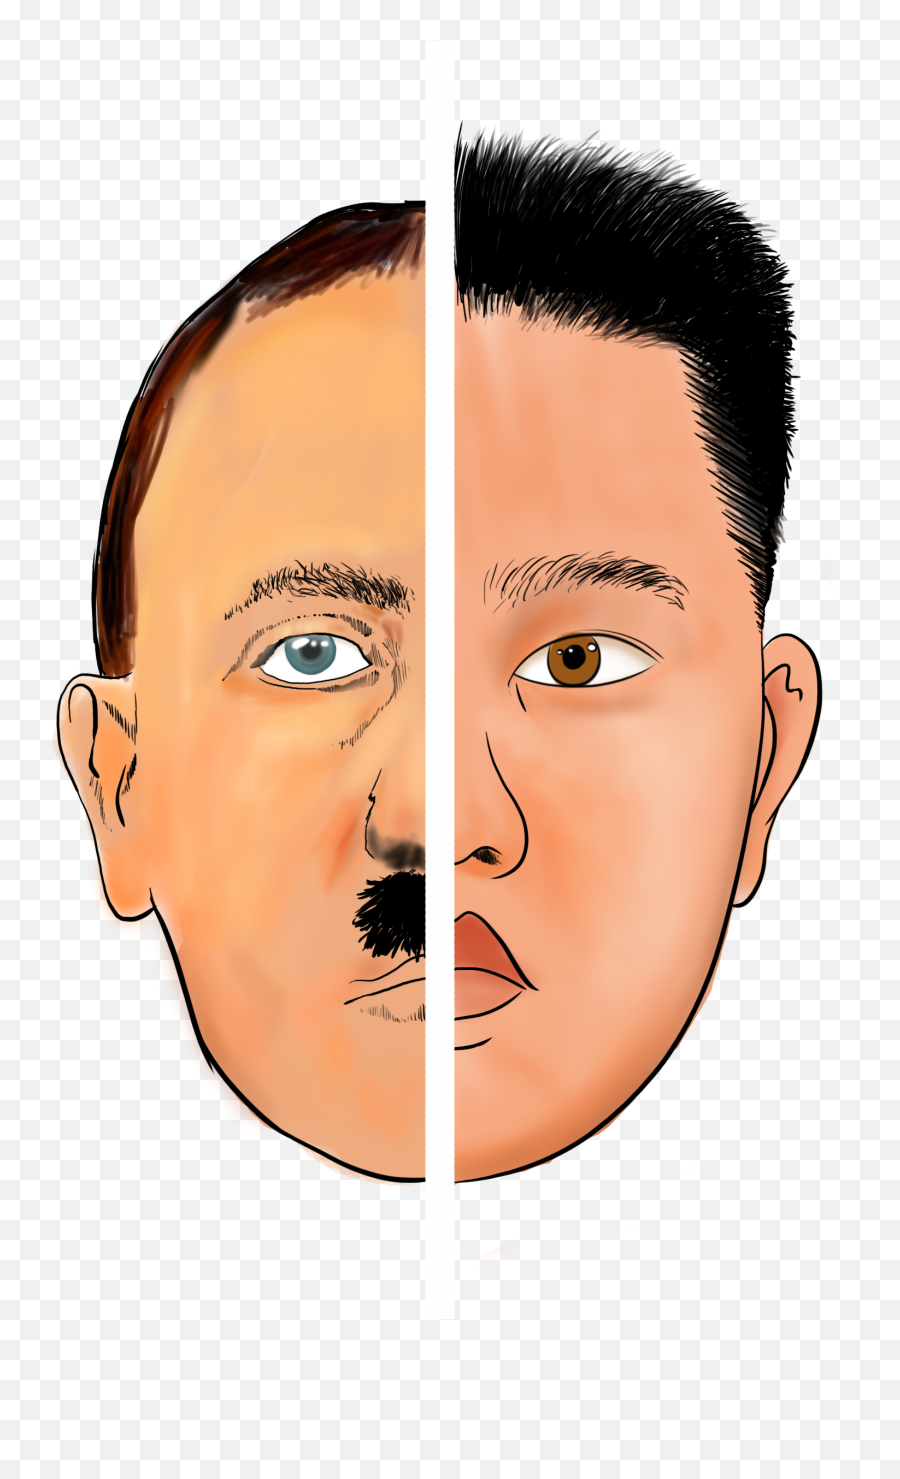 Download Adolf Hitler Png Image With No - Portable Network Graphics,Adolf Hitler Png